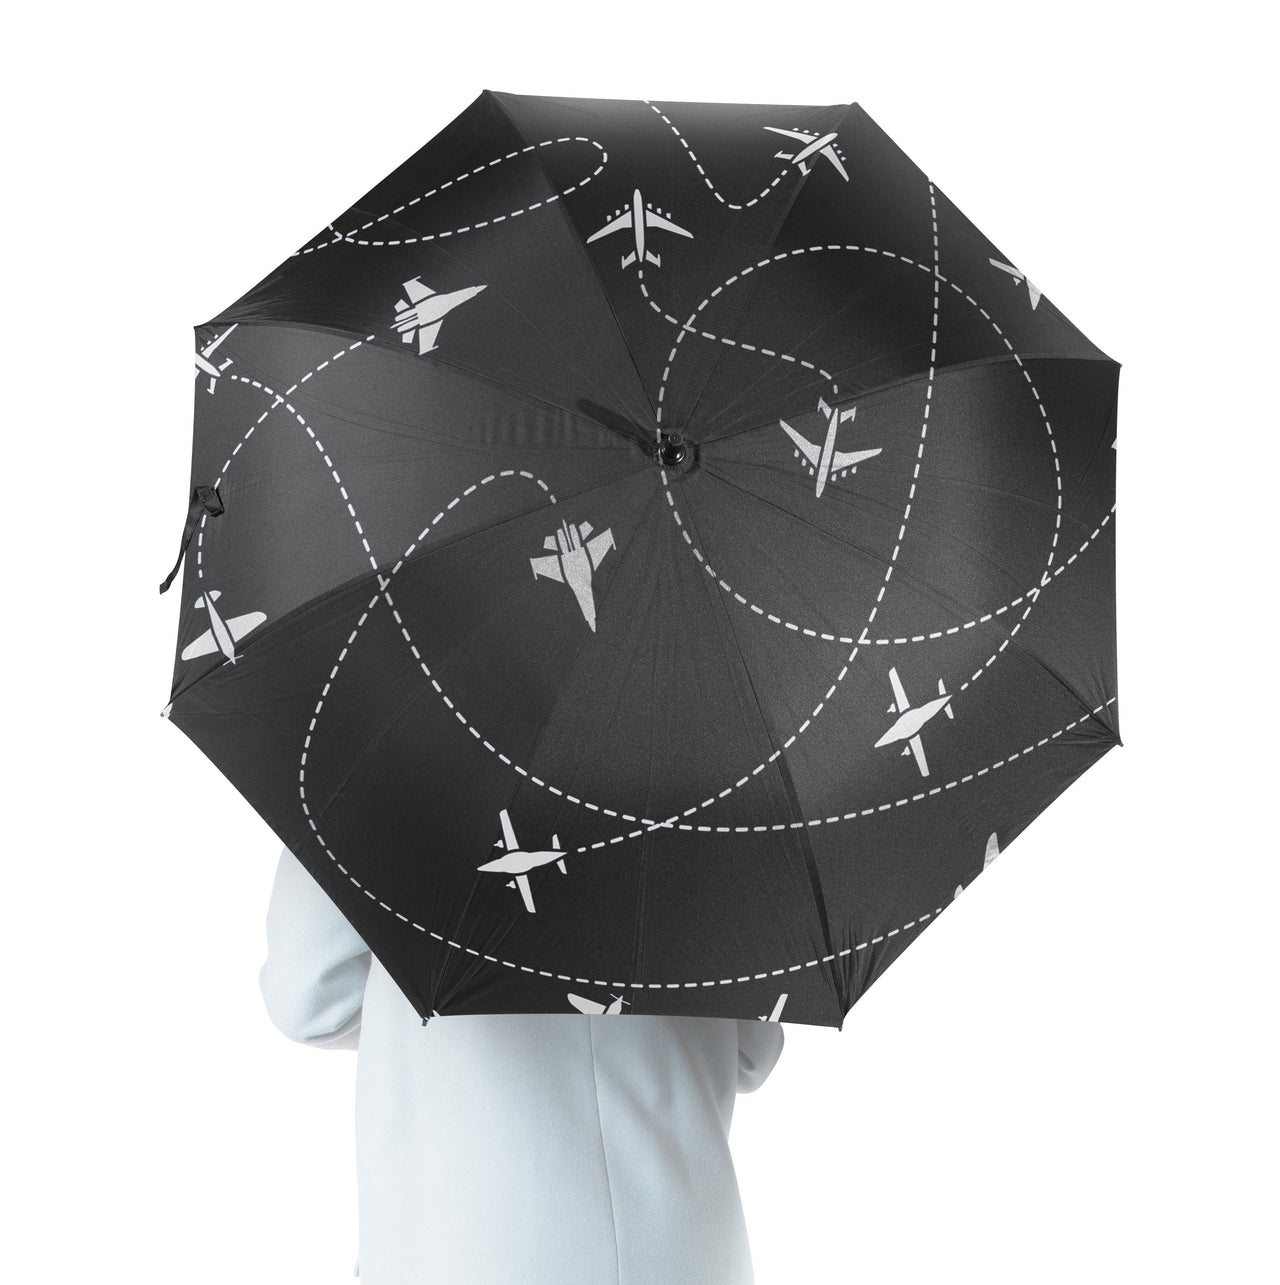 Travel The World By Plane (Black) Designed Umbrella